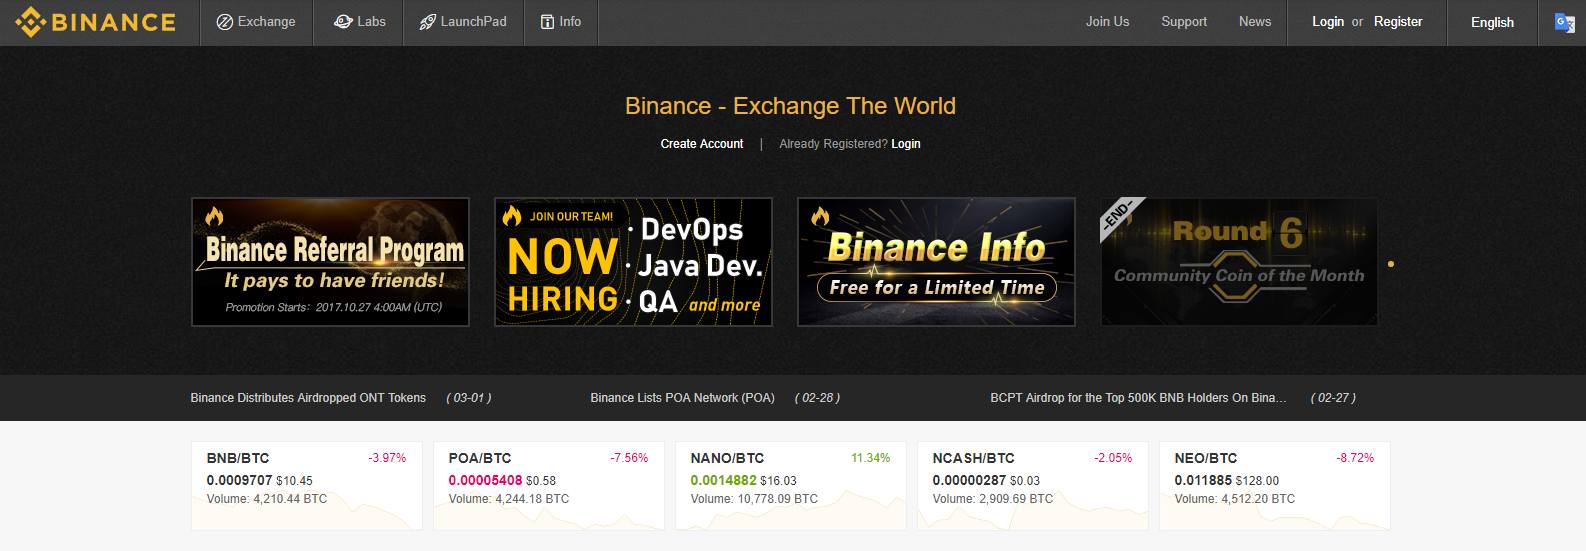 Homepage Binance.com